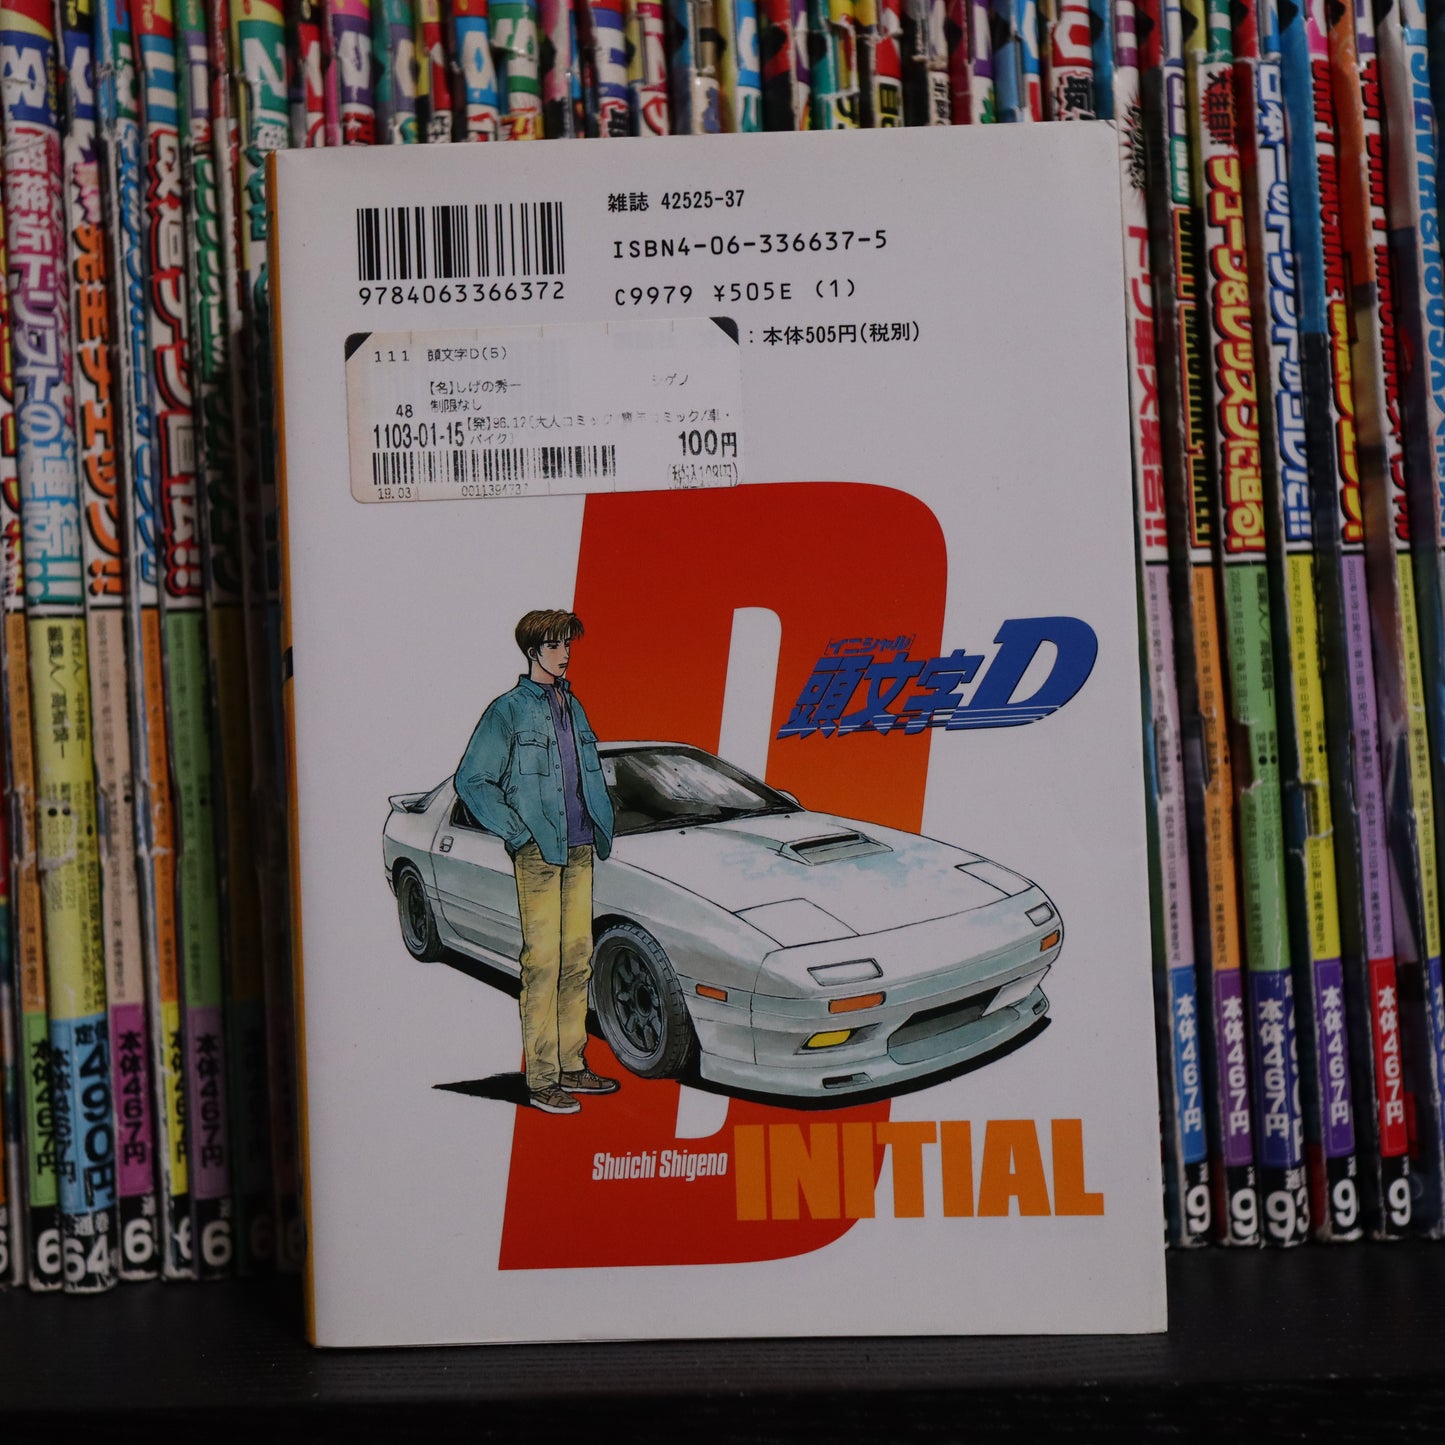 Initial D Manga Volume 5